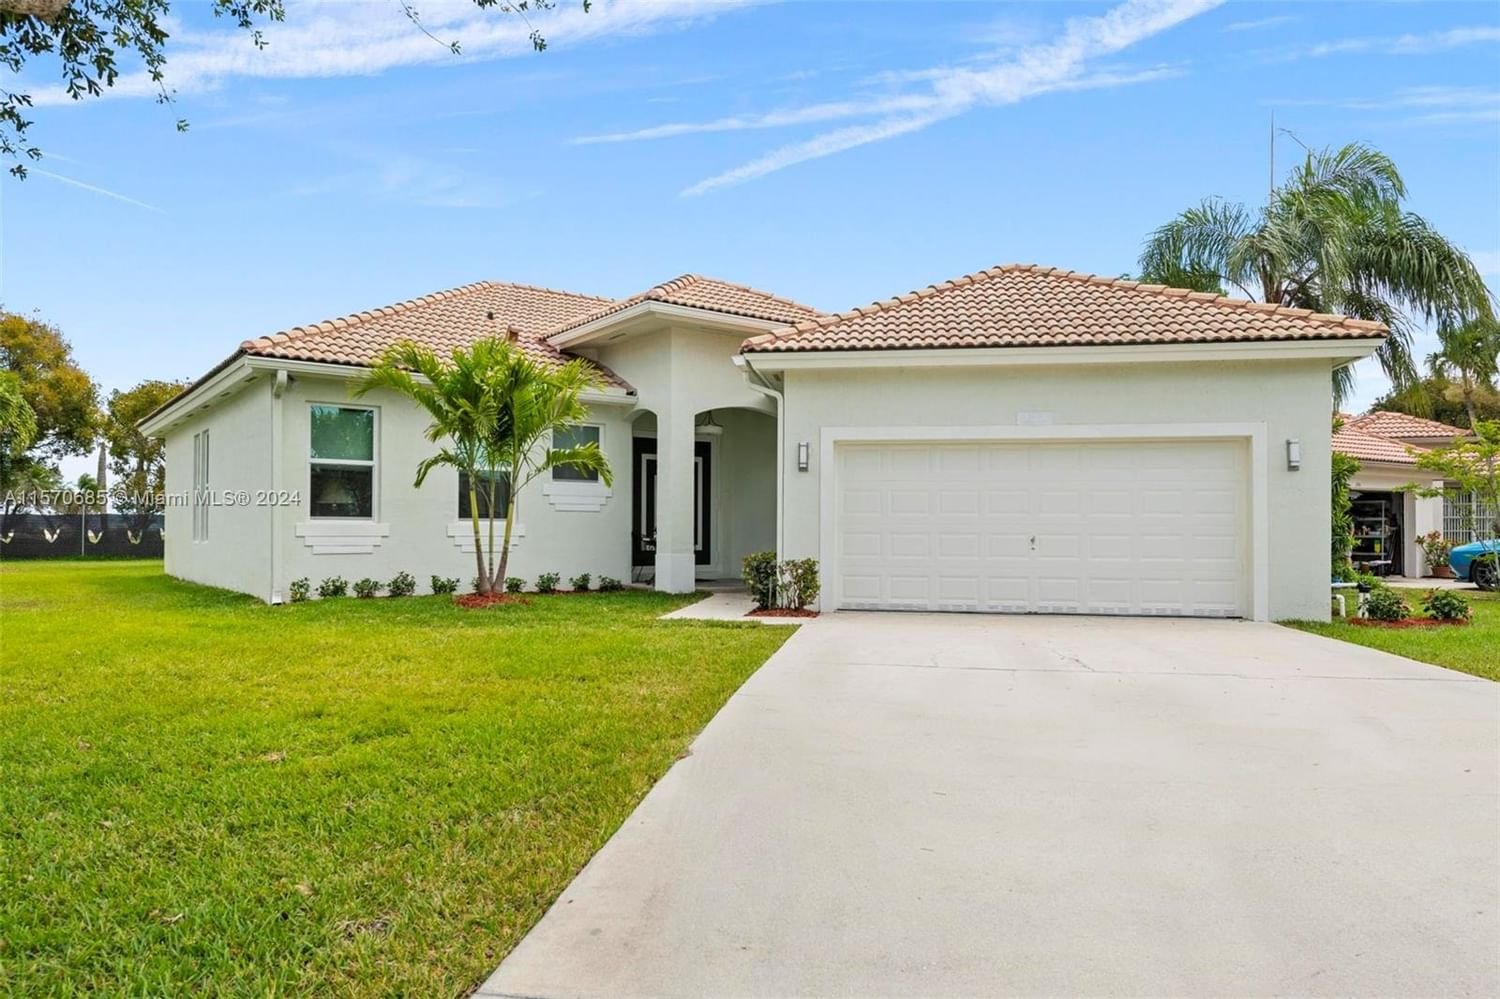 Real estate property located at 2609 Augusta Dr, Miami-Dade County, AUGUSTA GREENS CONDO, Homestead, FL